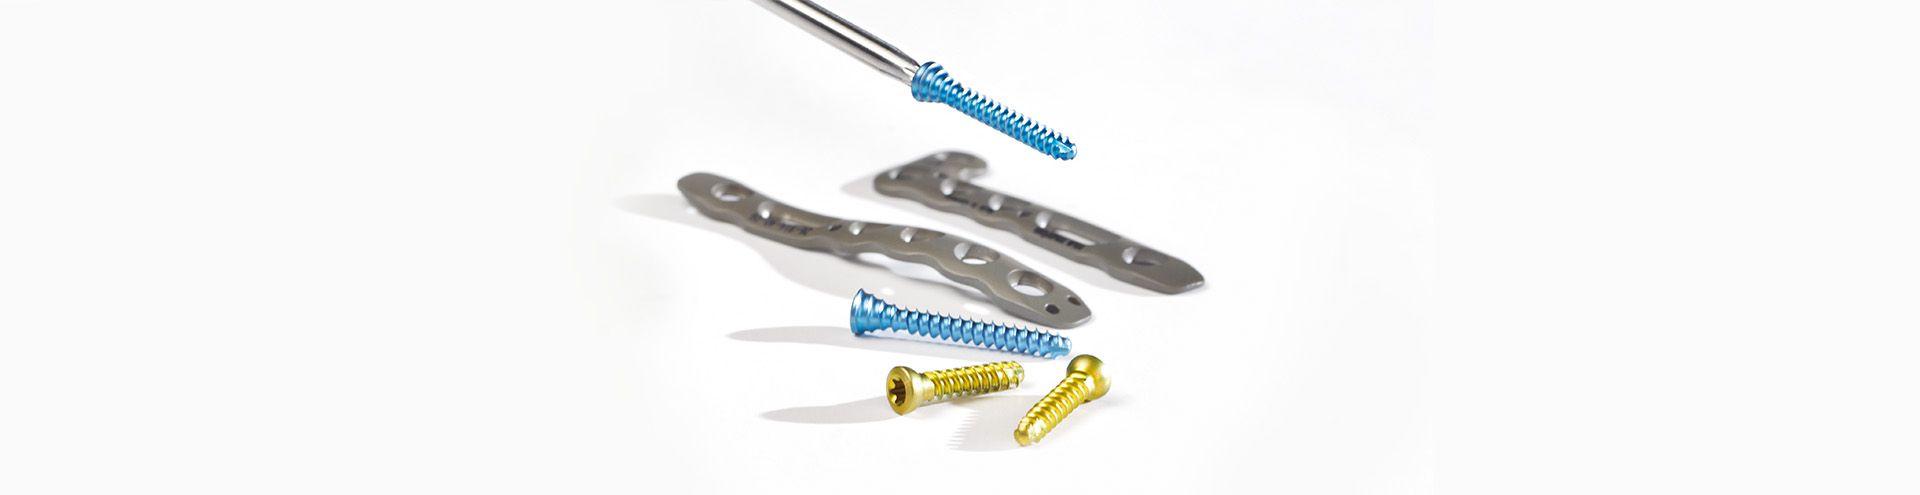 Handsurgery - Implants hand plates screws